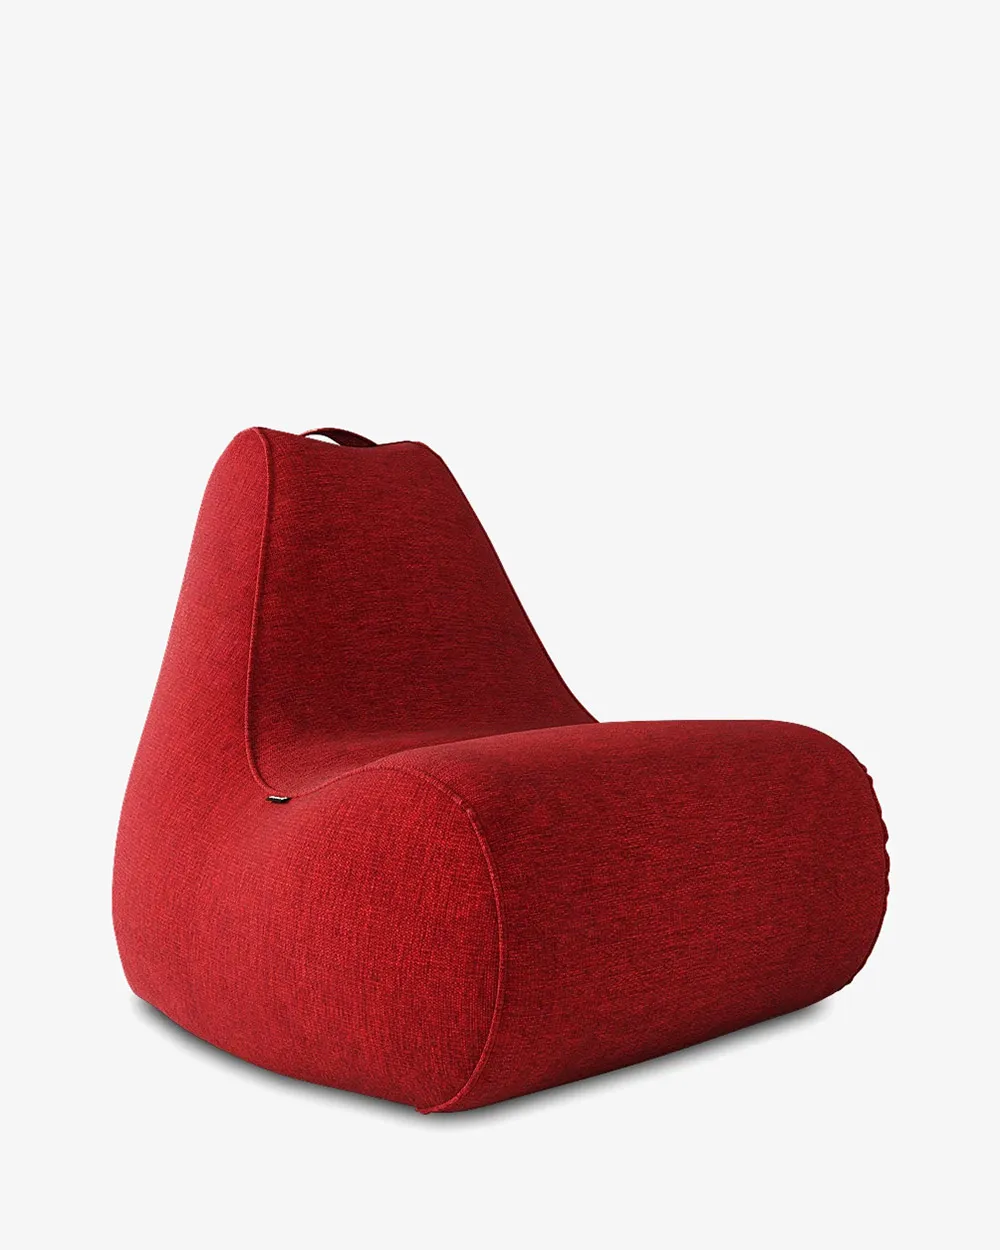 Ghế Lười Paraiso Chair Đỏ